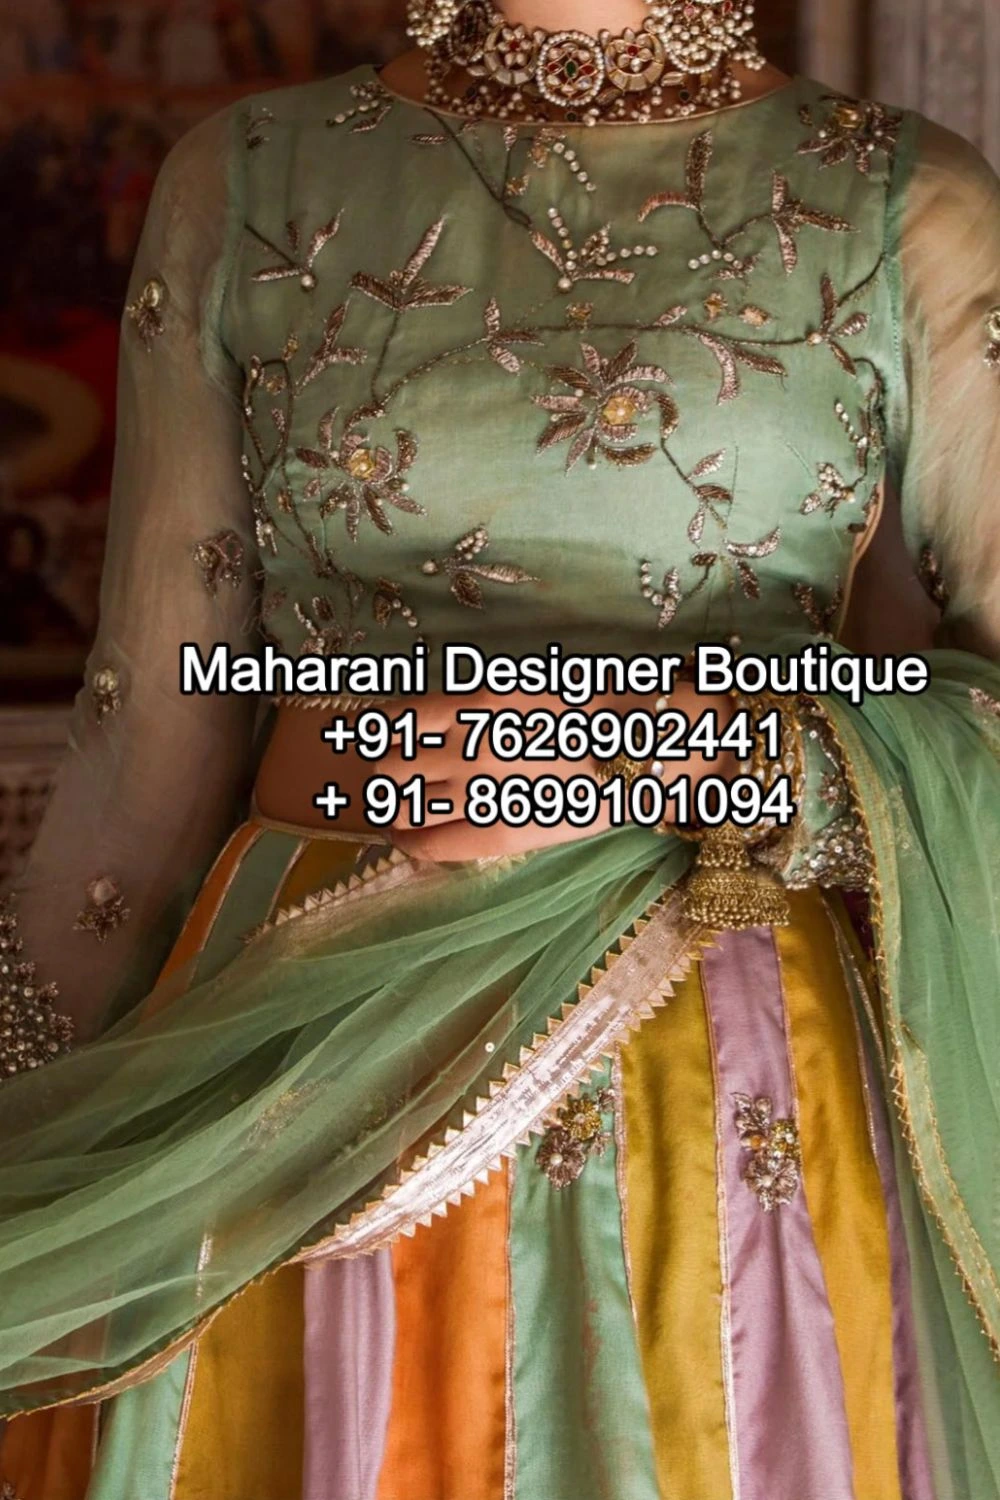 lehenga blouse designs for bridal, lehenga blouse designs for